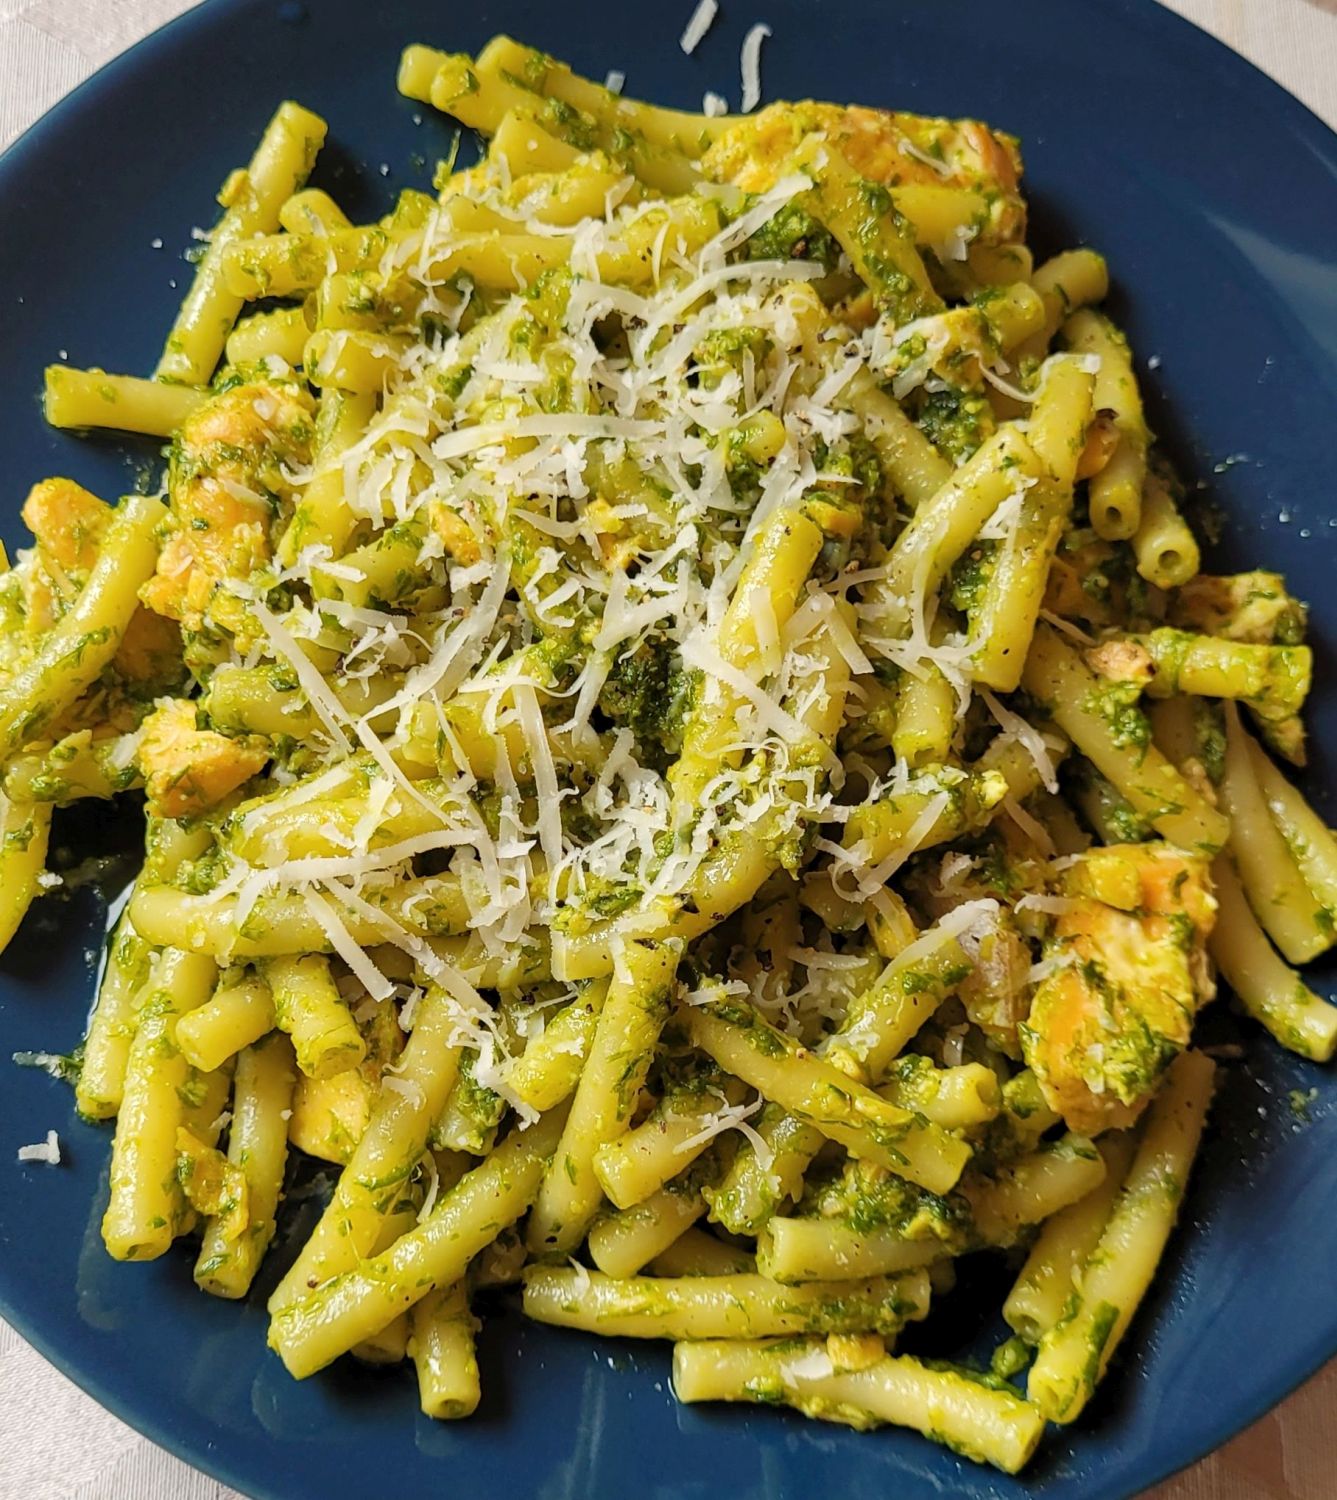 Nina's Recipes: Salmon Pasta with wild garlic (Bärlauch) - dinner after making pesto 